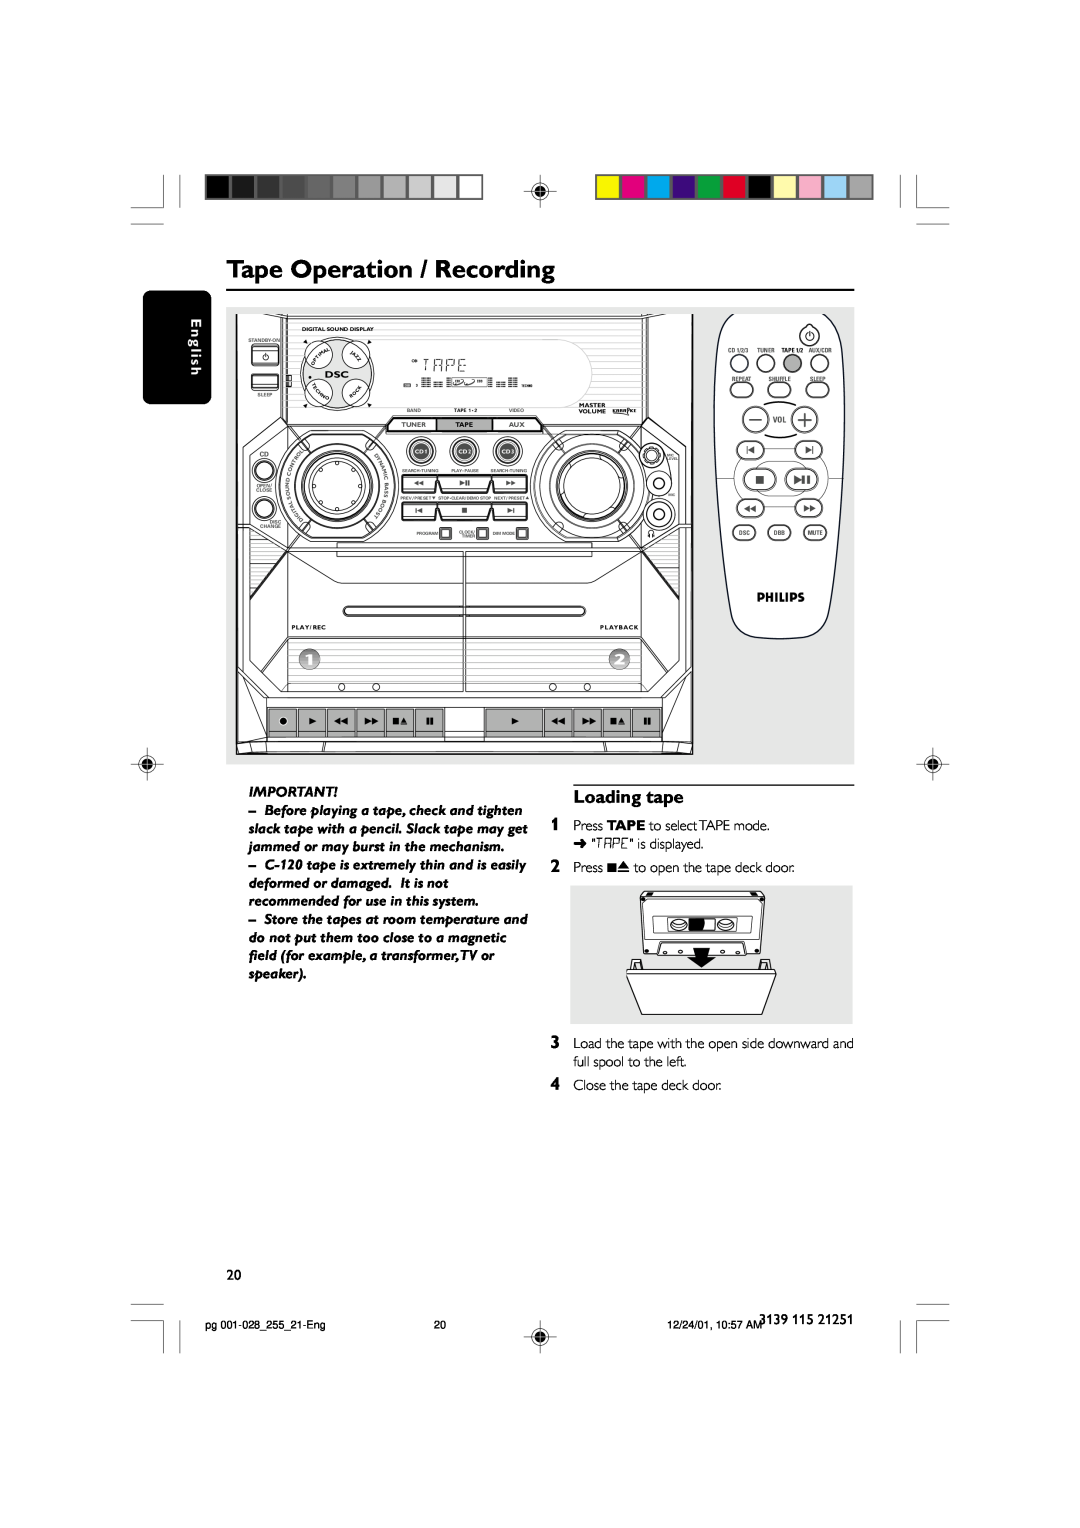 Philips C255 manual Tape Operation / Recording, pg 001-028 255 21-Eng, 12/24/01, 10 57 AM, Sleep, Tuner, Mute, News/Ta 